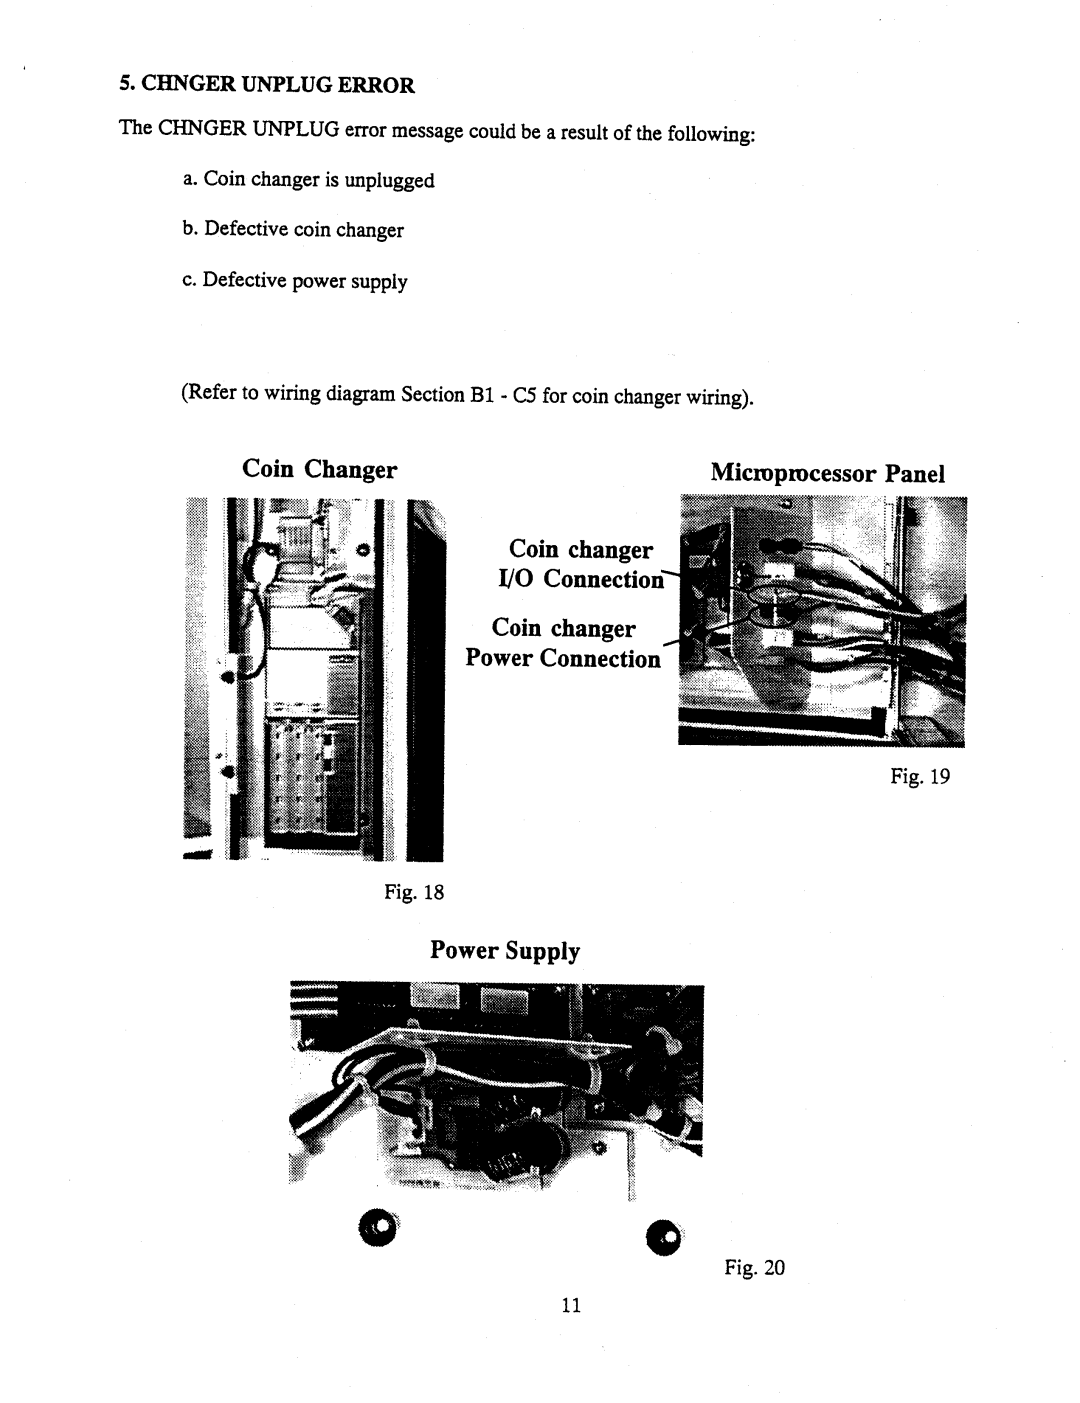 American Dryer Corp AD-830 manual 